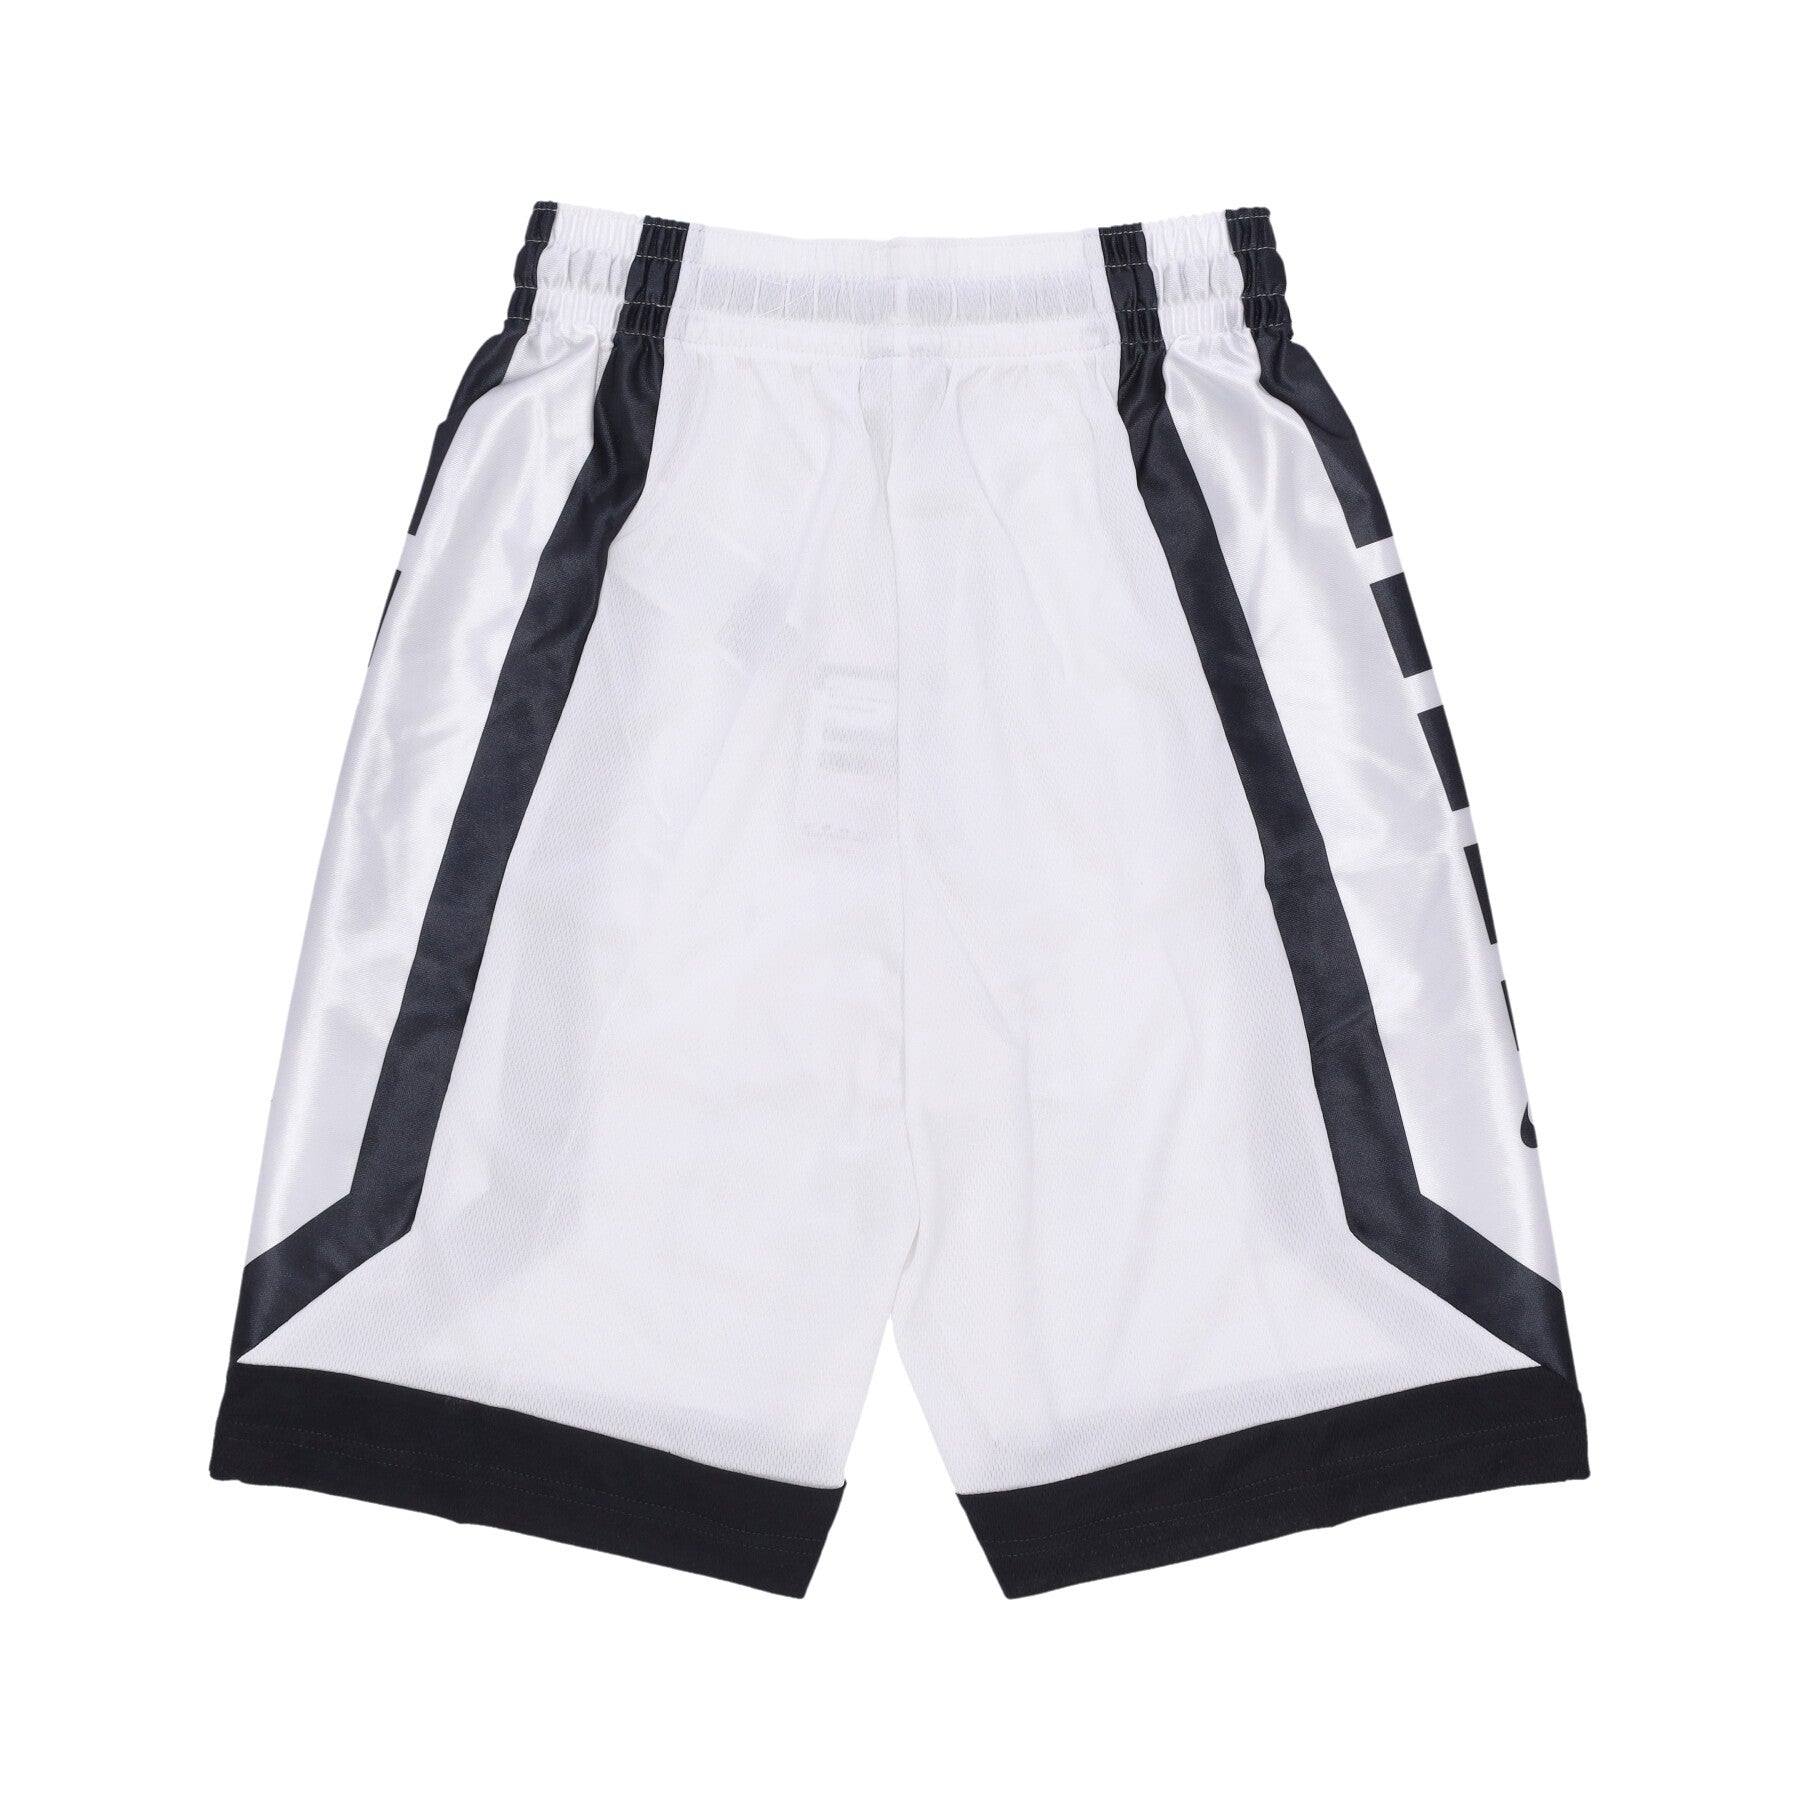 Pantaloncino Tipo Basket Uomo Dri-fit Elite Basketball Shorts White/black/black